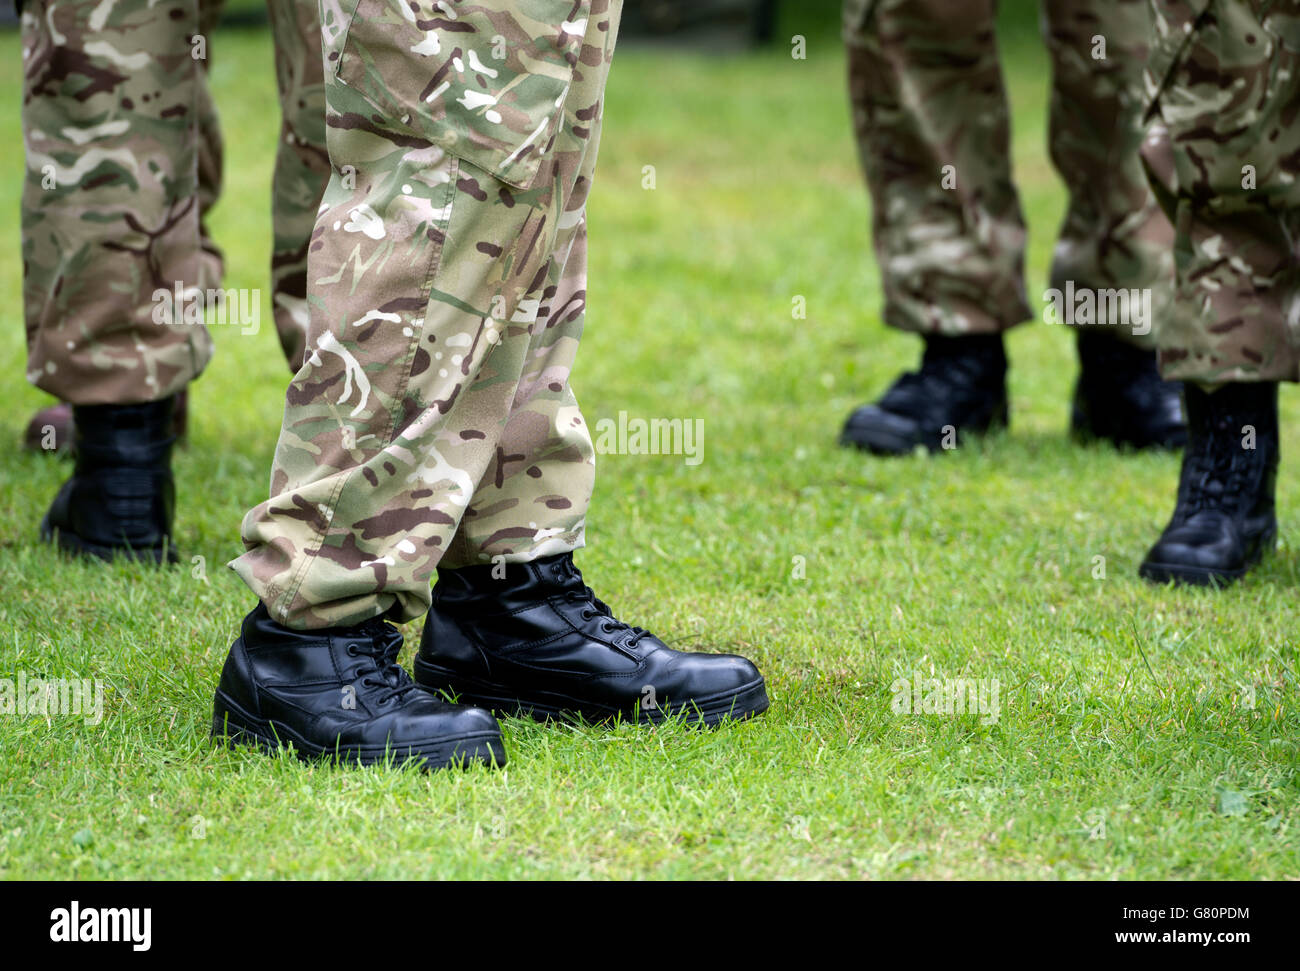 british army boots black